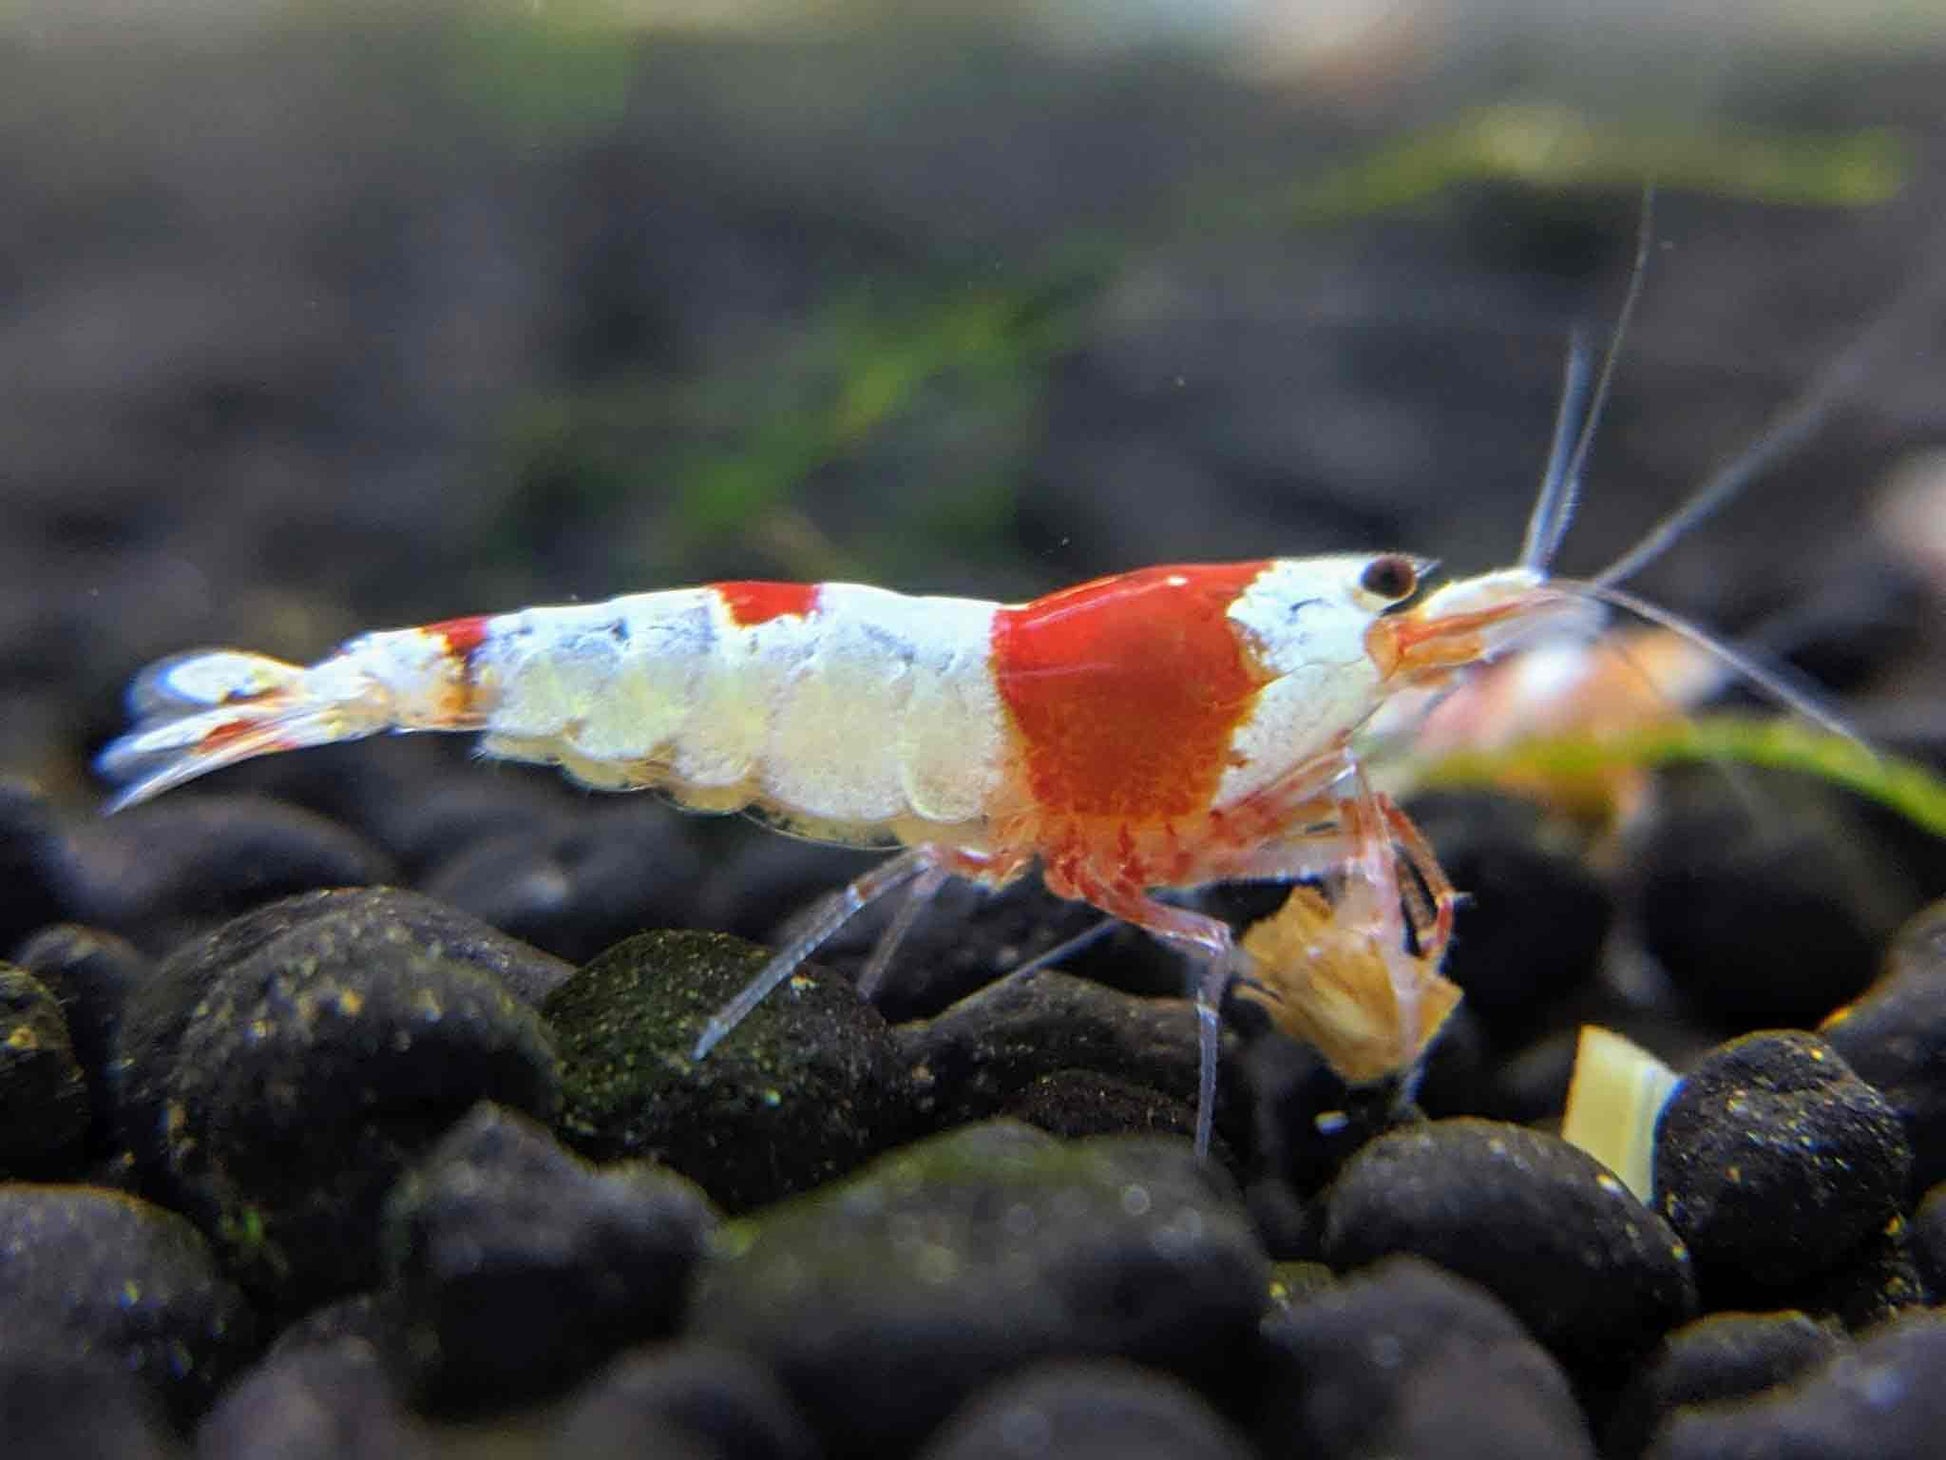 Adorable red crystal shrimp.